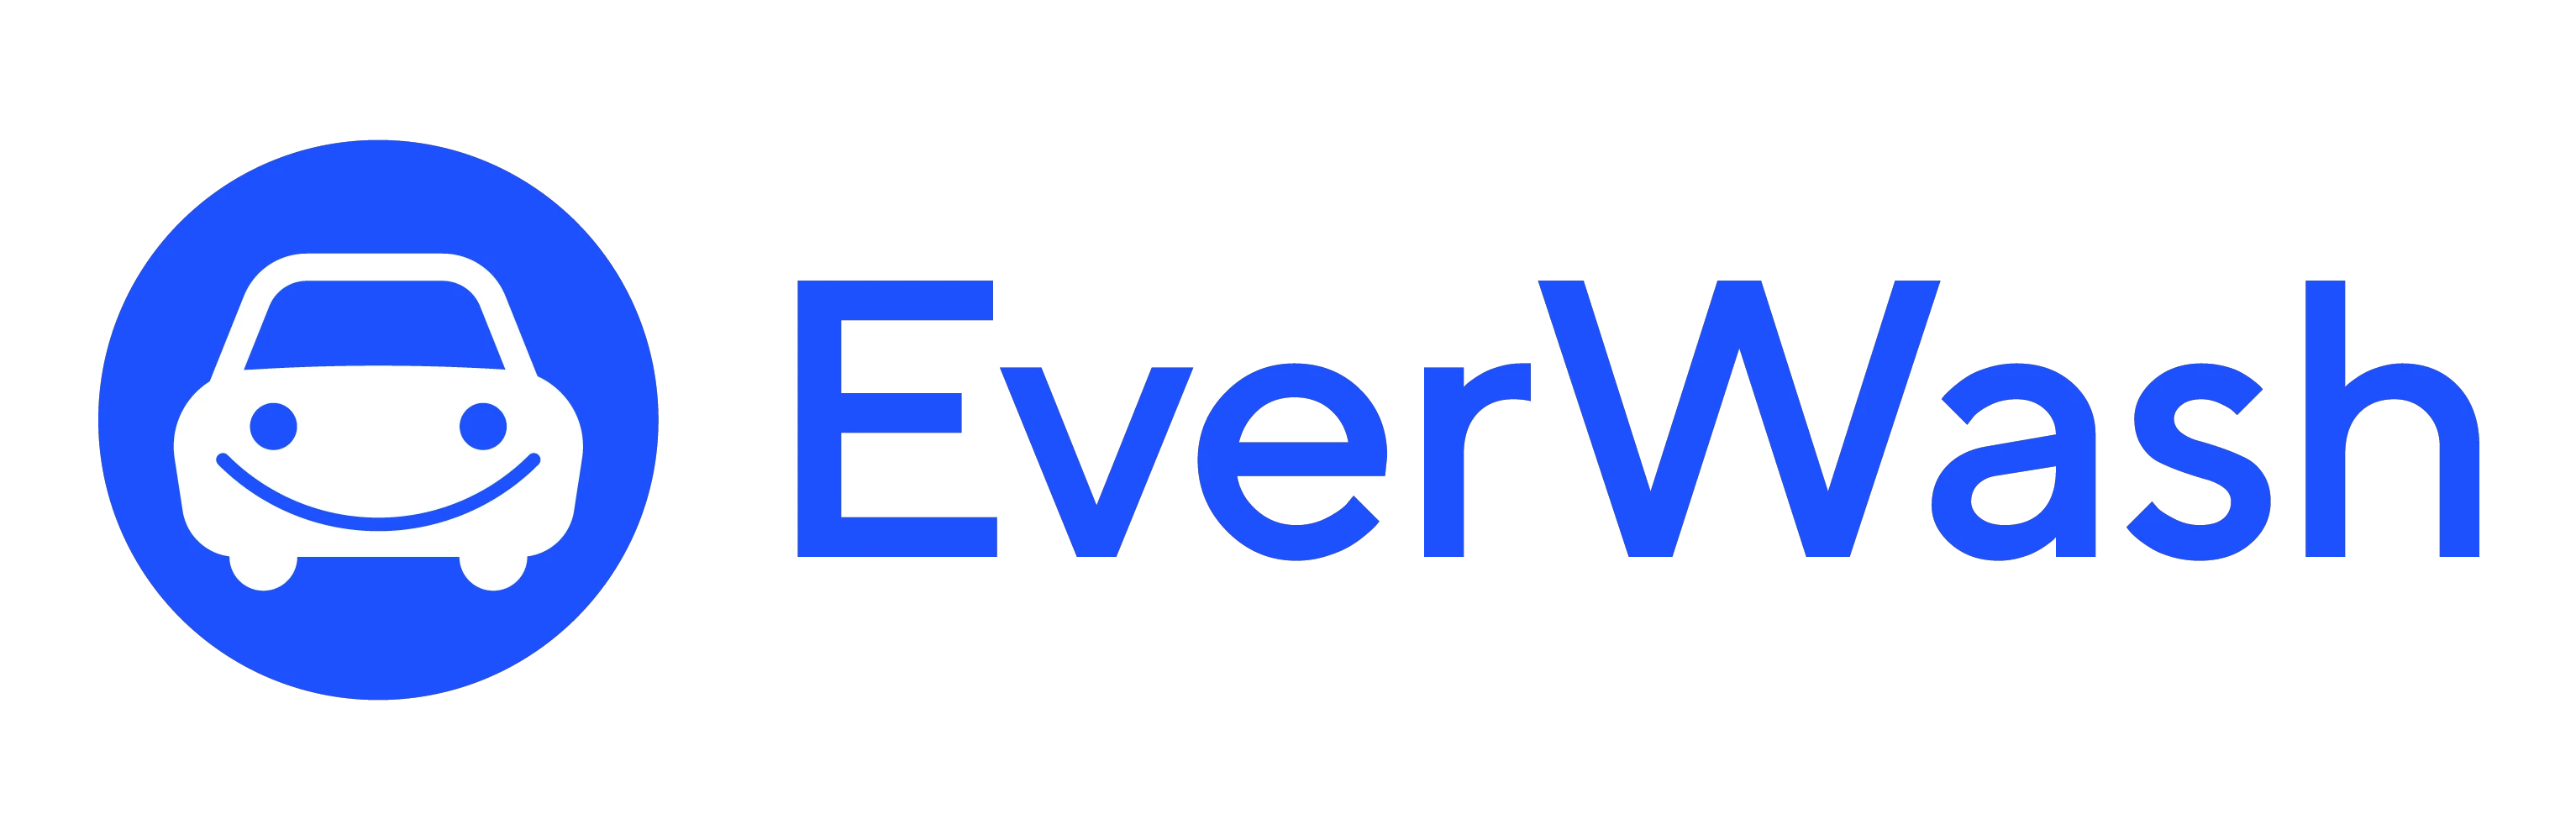 EverWash promo code 